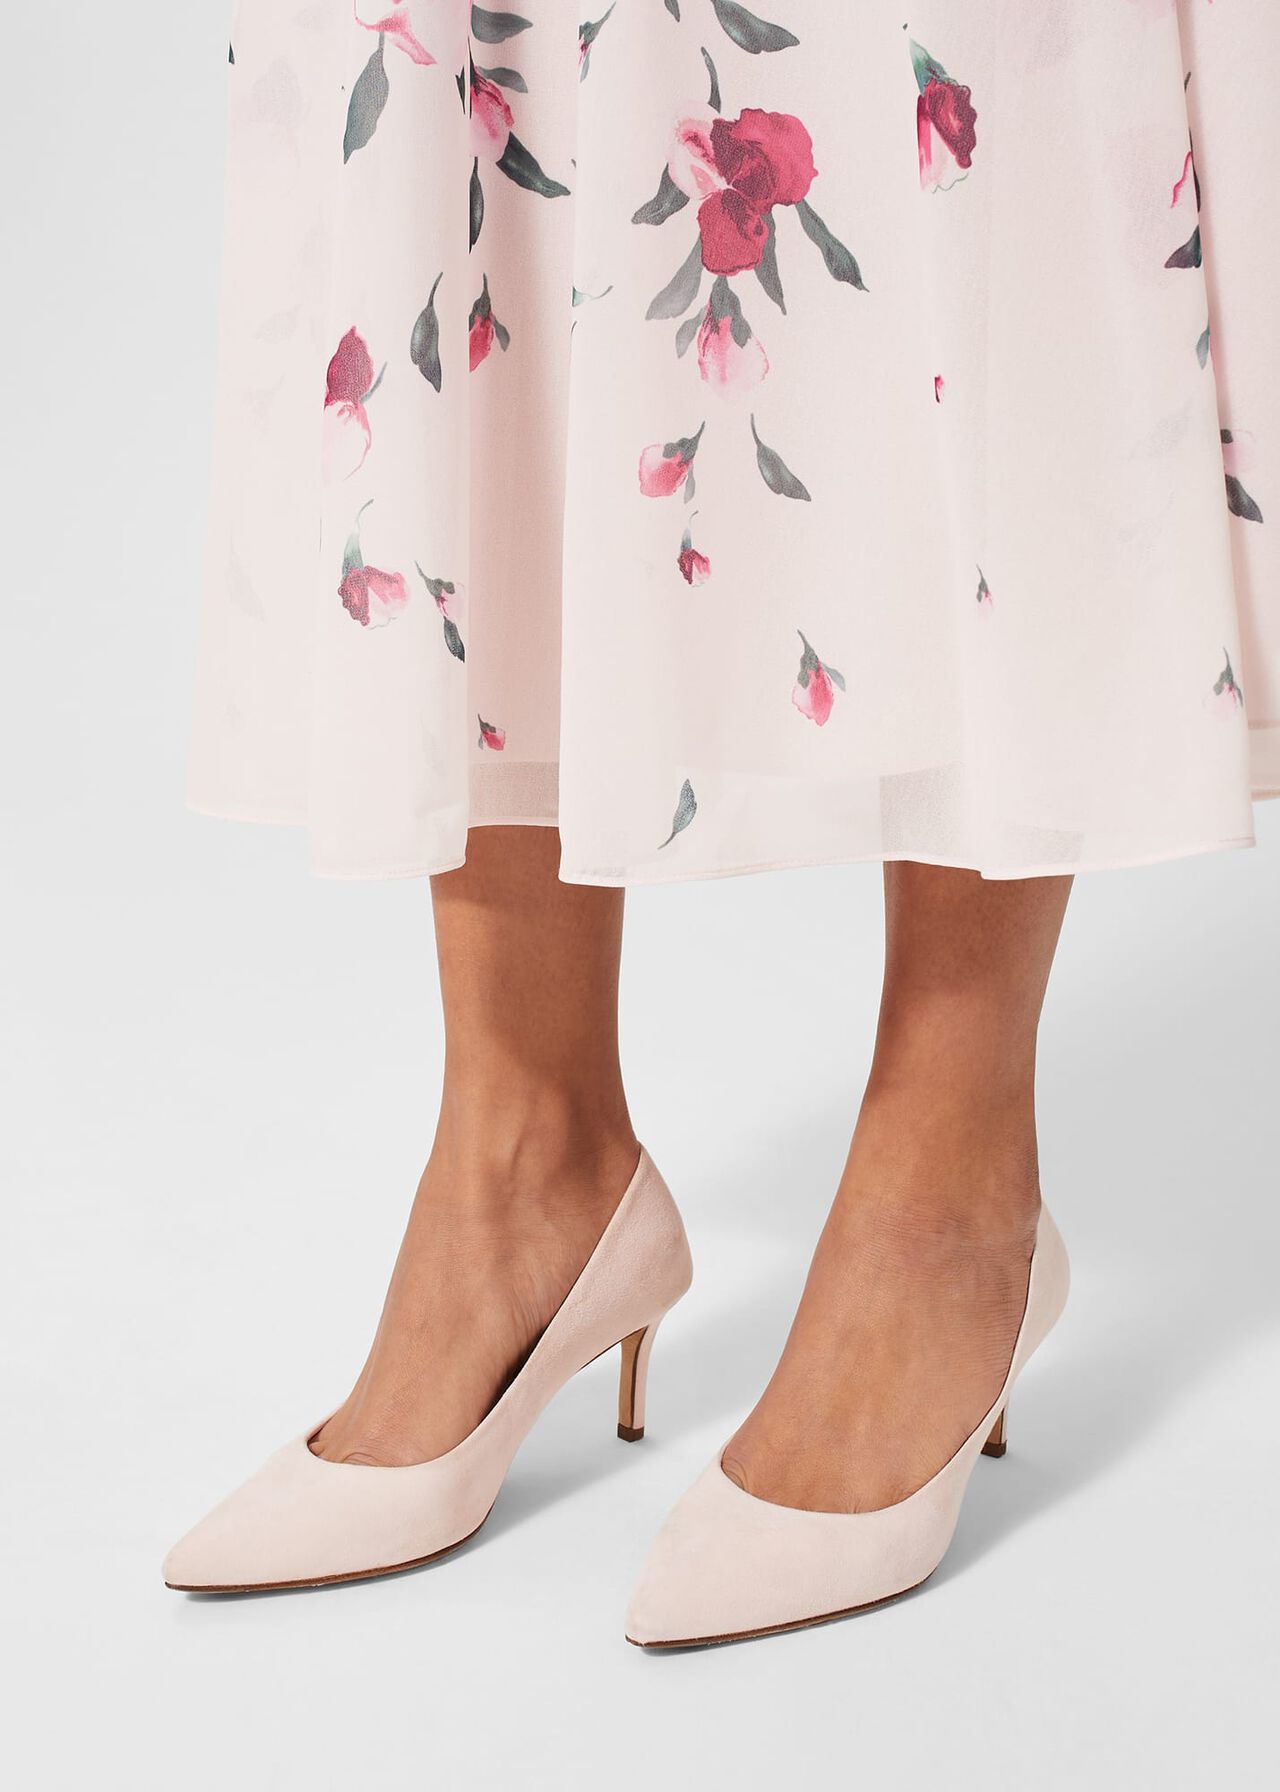 Adrienne Court Shoes, Pale Pink, hi-res